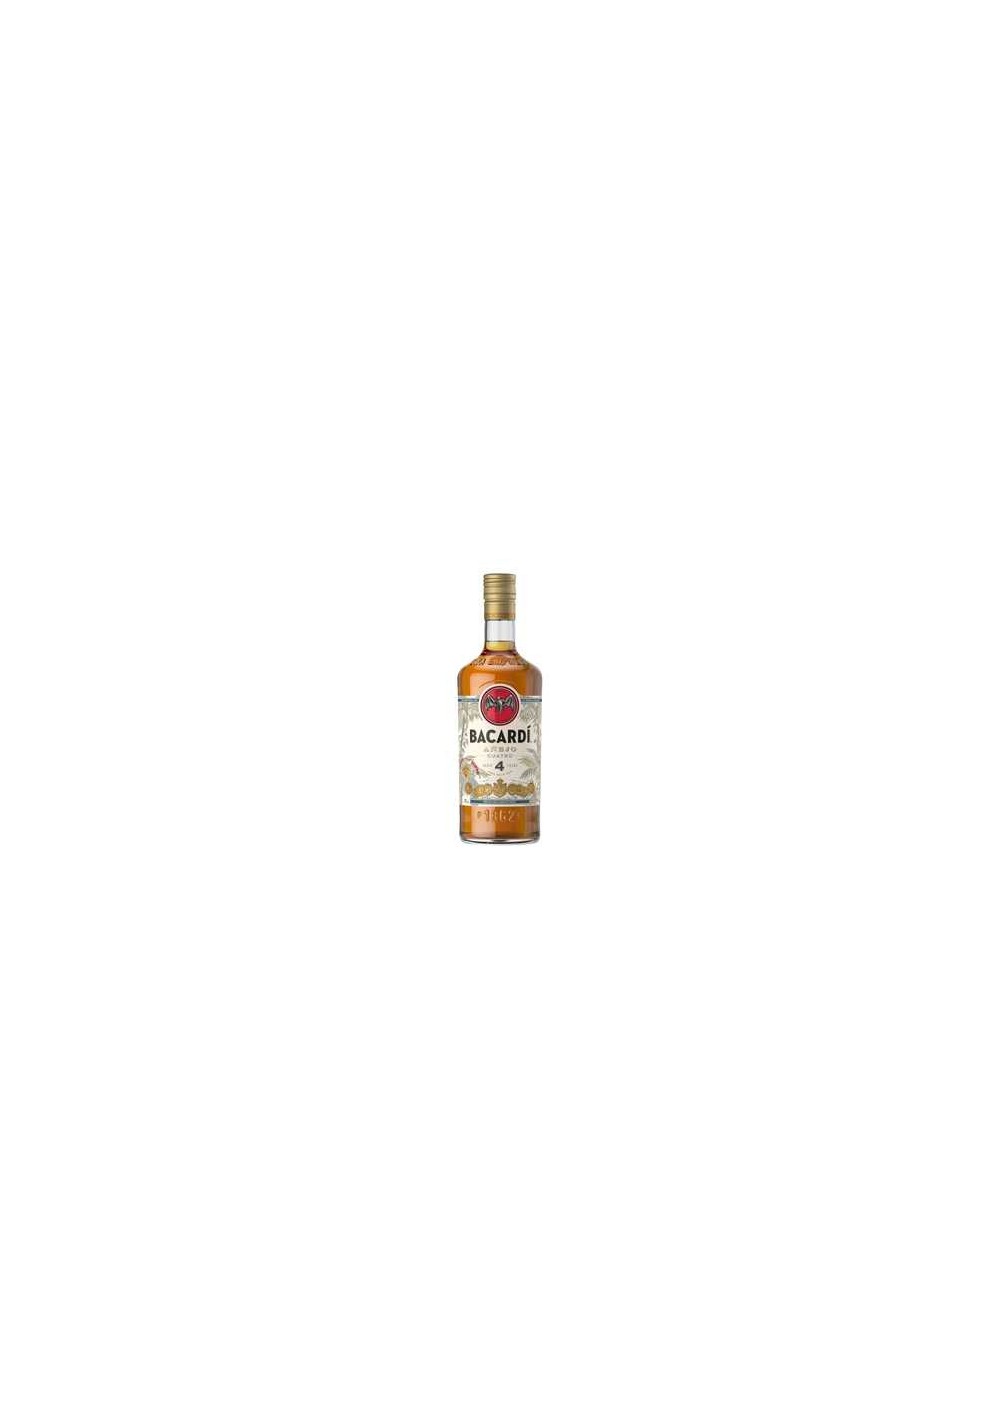 Bacardi - Anejo Cuatro - Rum - (70cl)